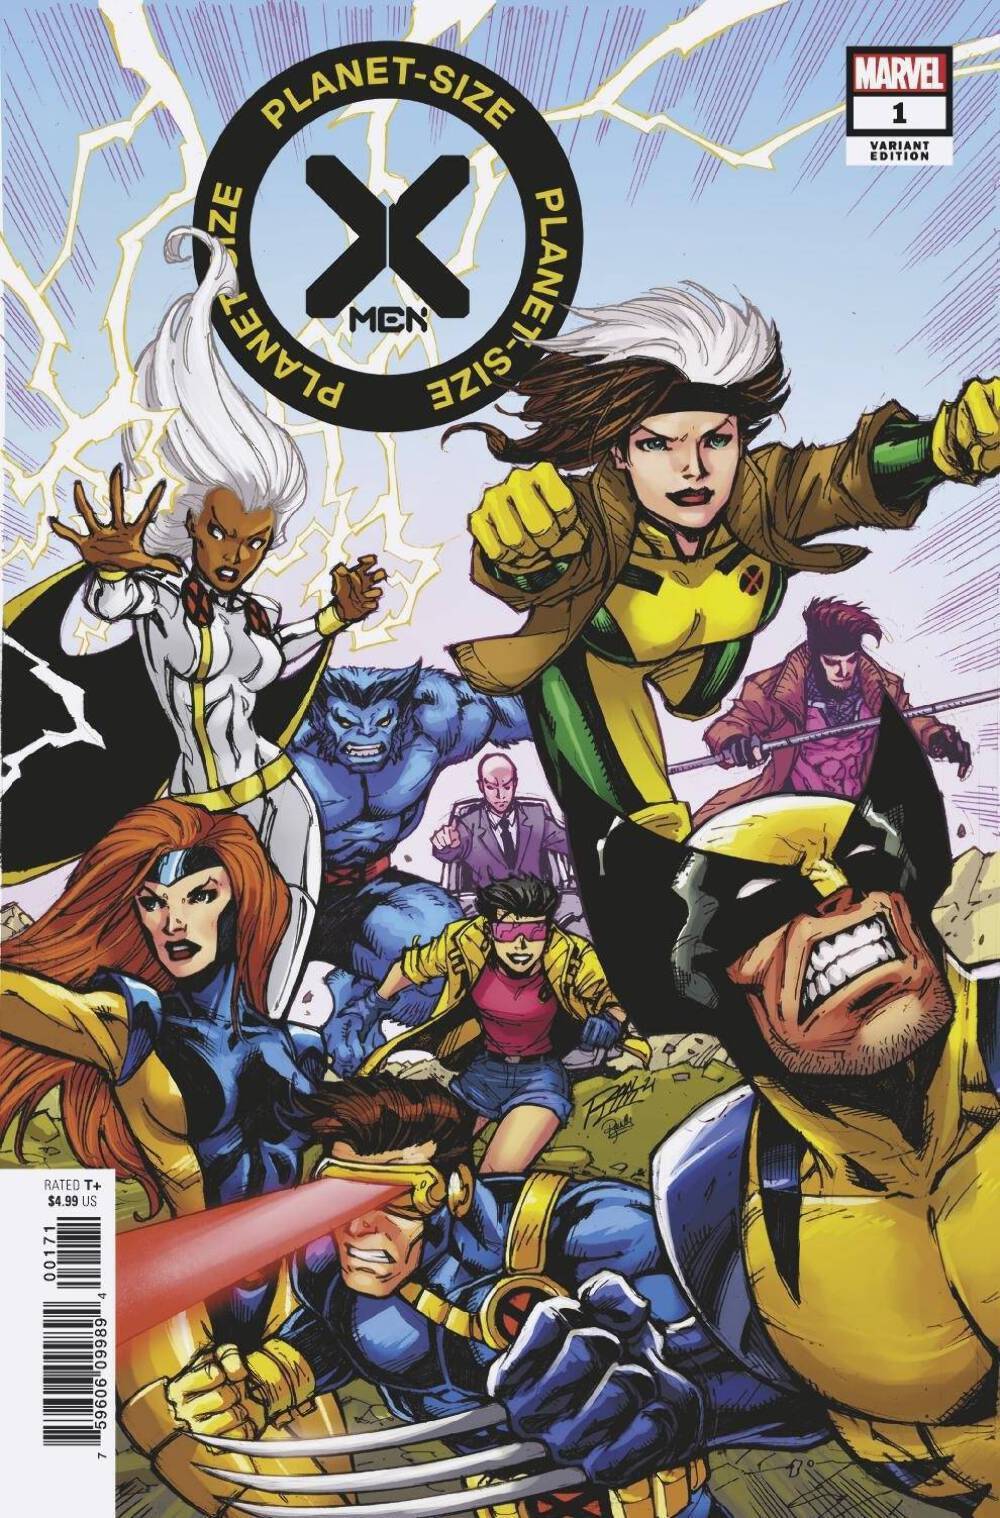 Planet-Sized X-Men #1 Lim X-Men 90s Variant Cover Gala